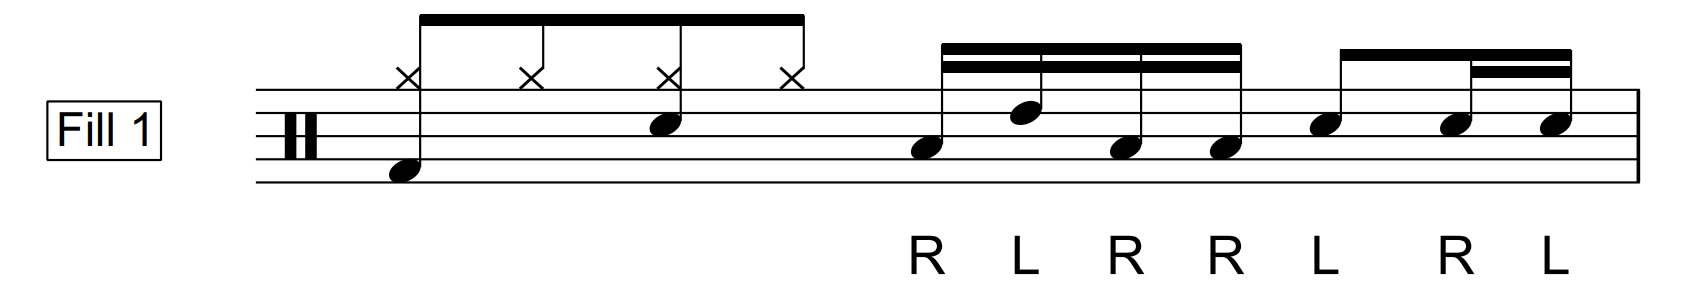 paradiddle notation